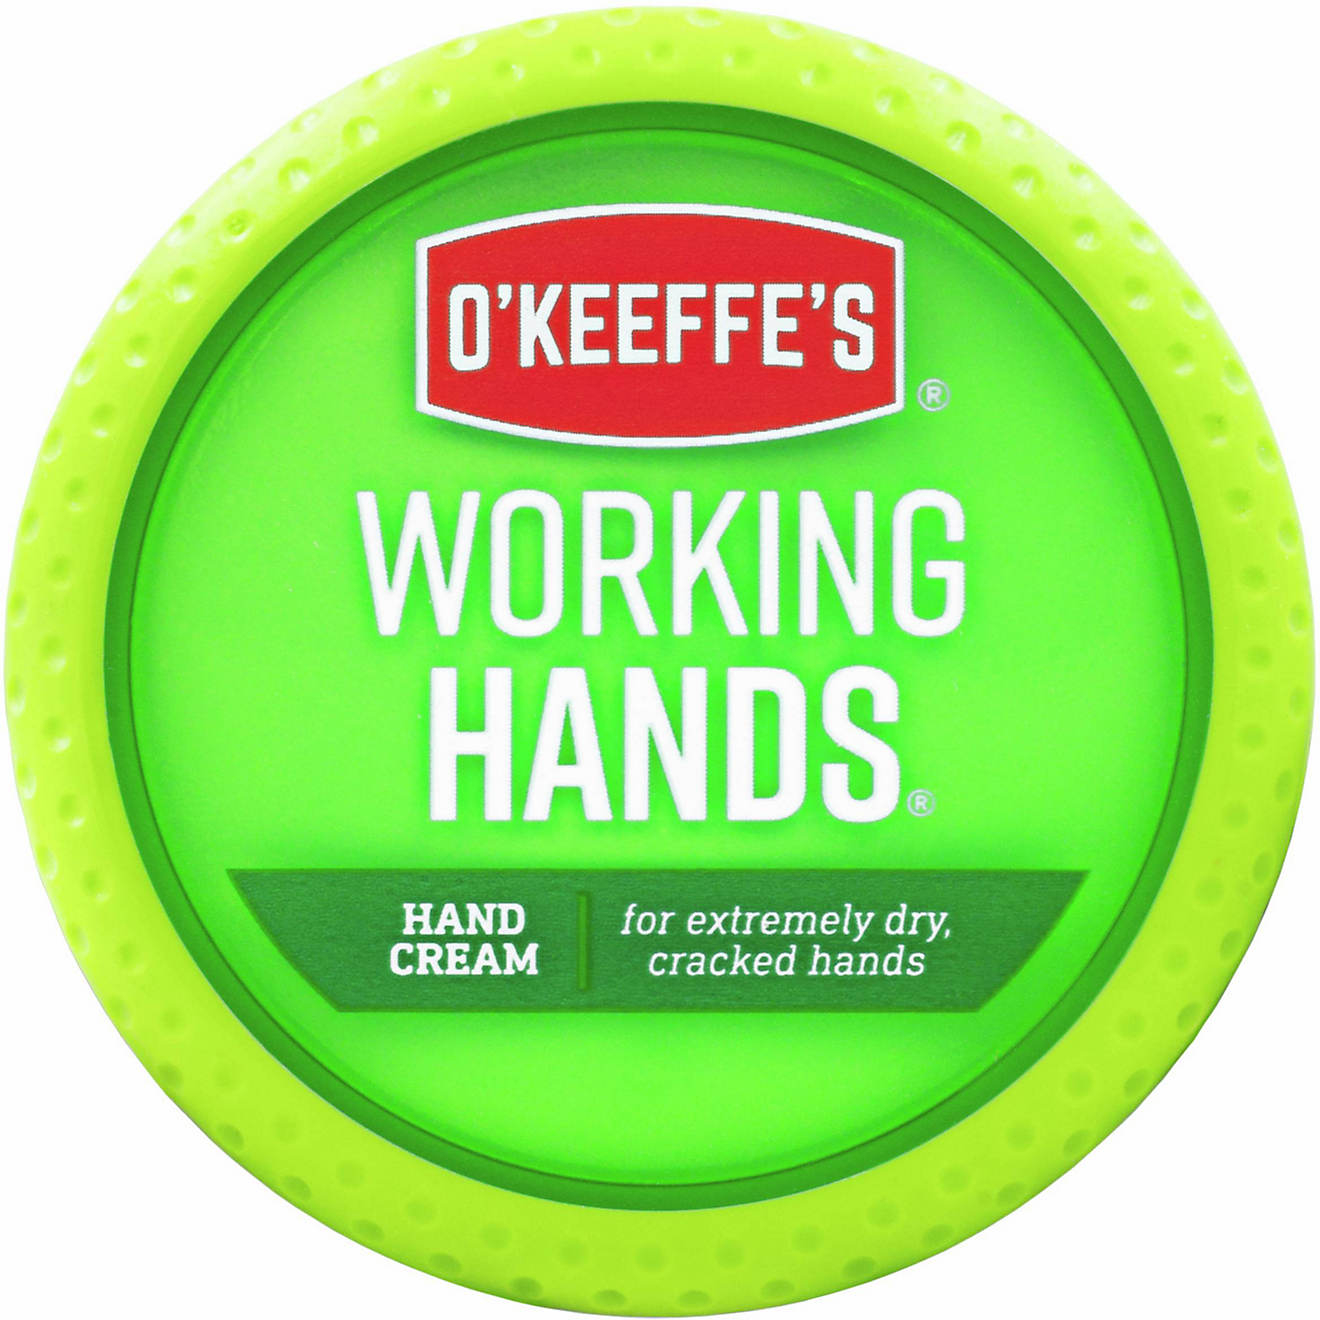 O'Keeffe's Working Hands Cream 3.4 oz Jar